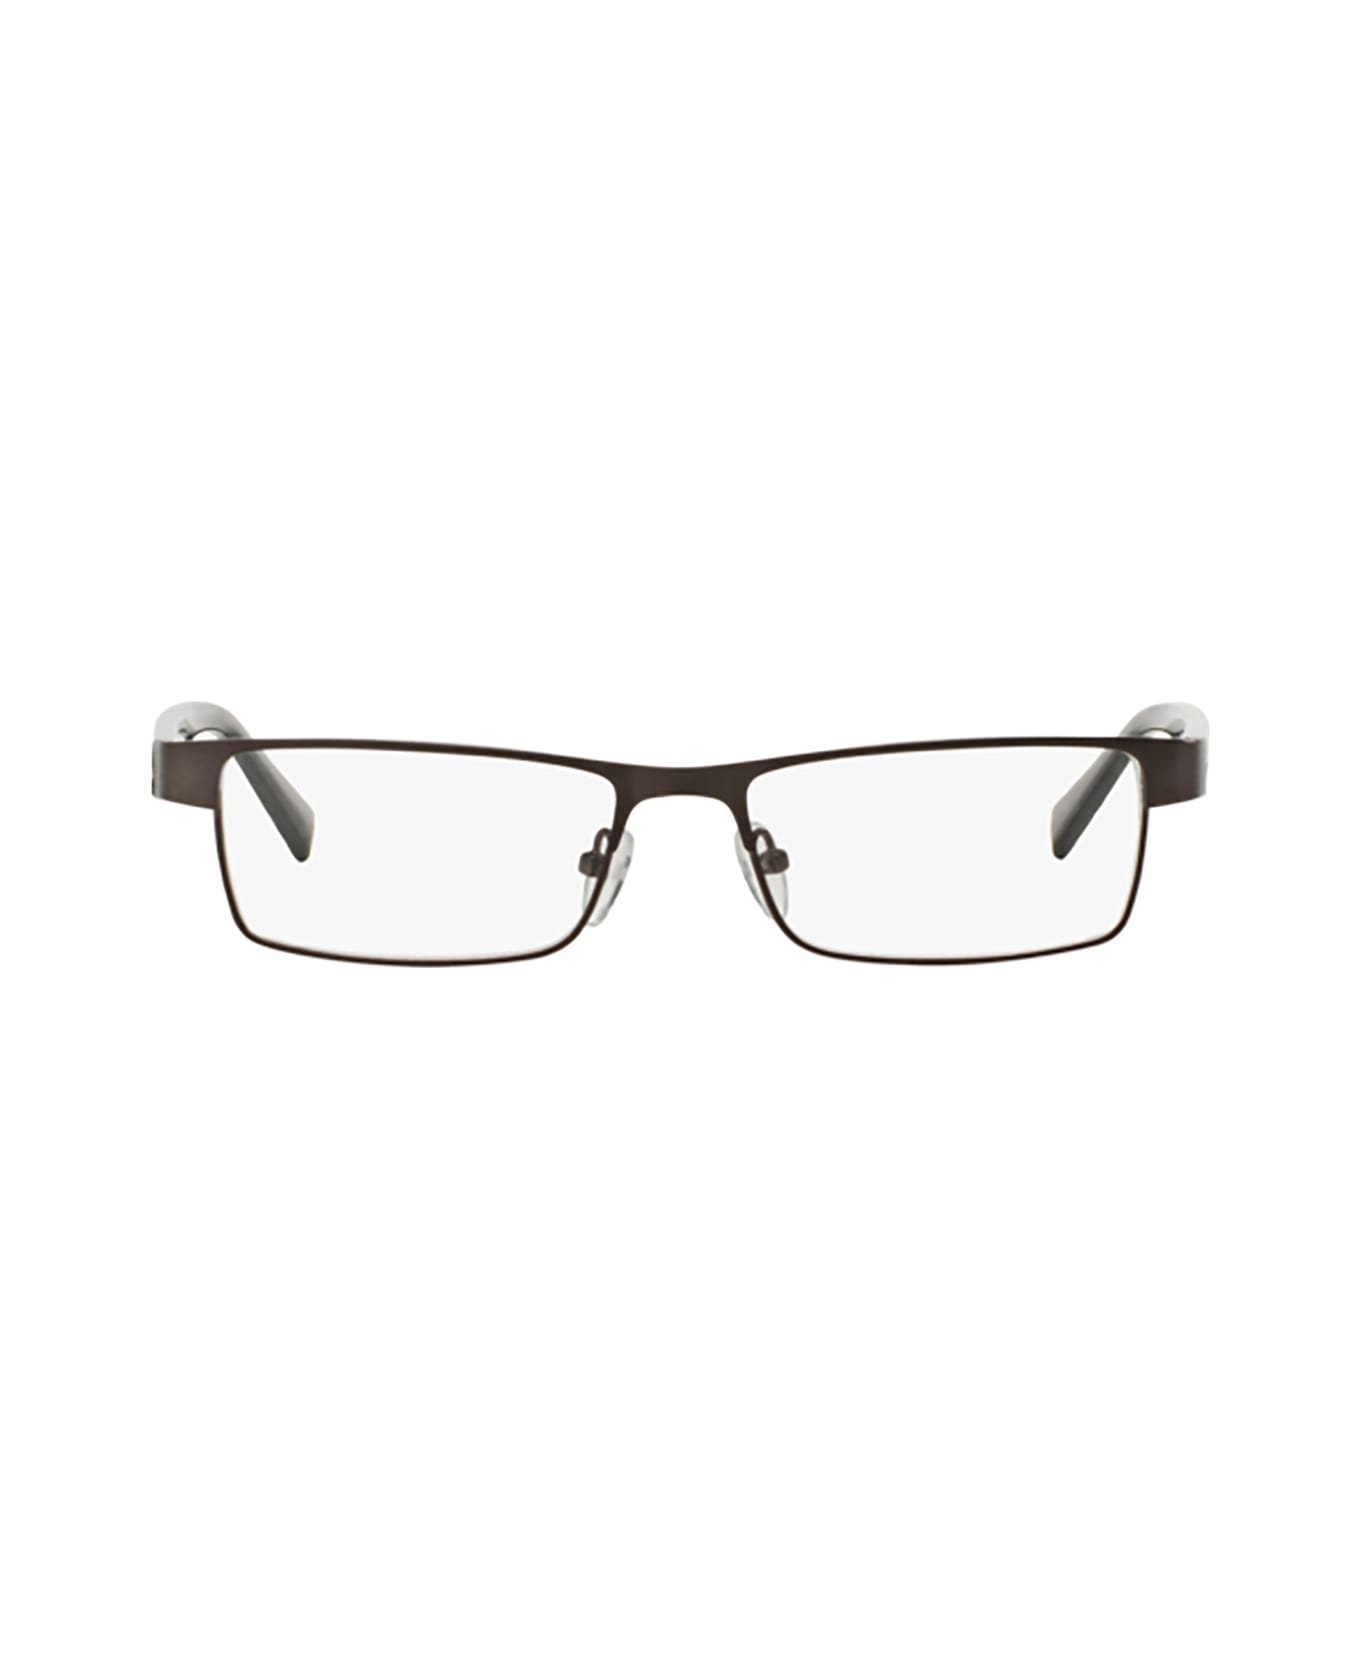 Armani Exchange Ax1009 Matte Brown Glasses - Matte Brown アイウェア